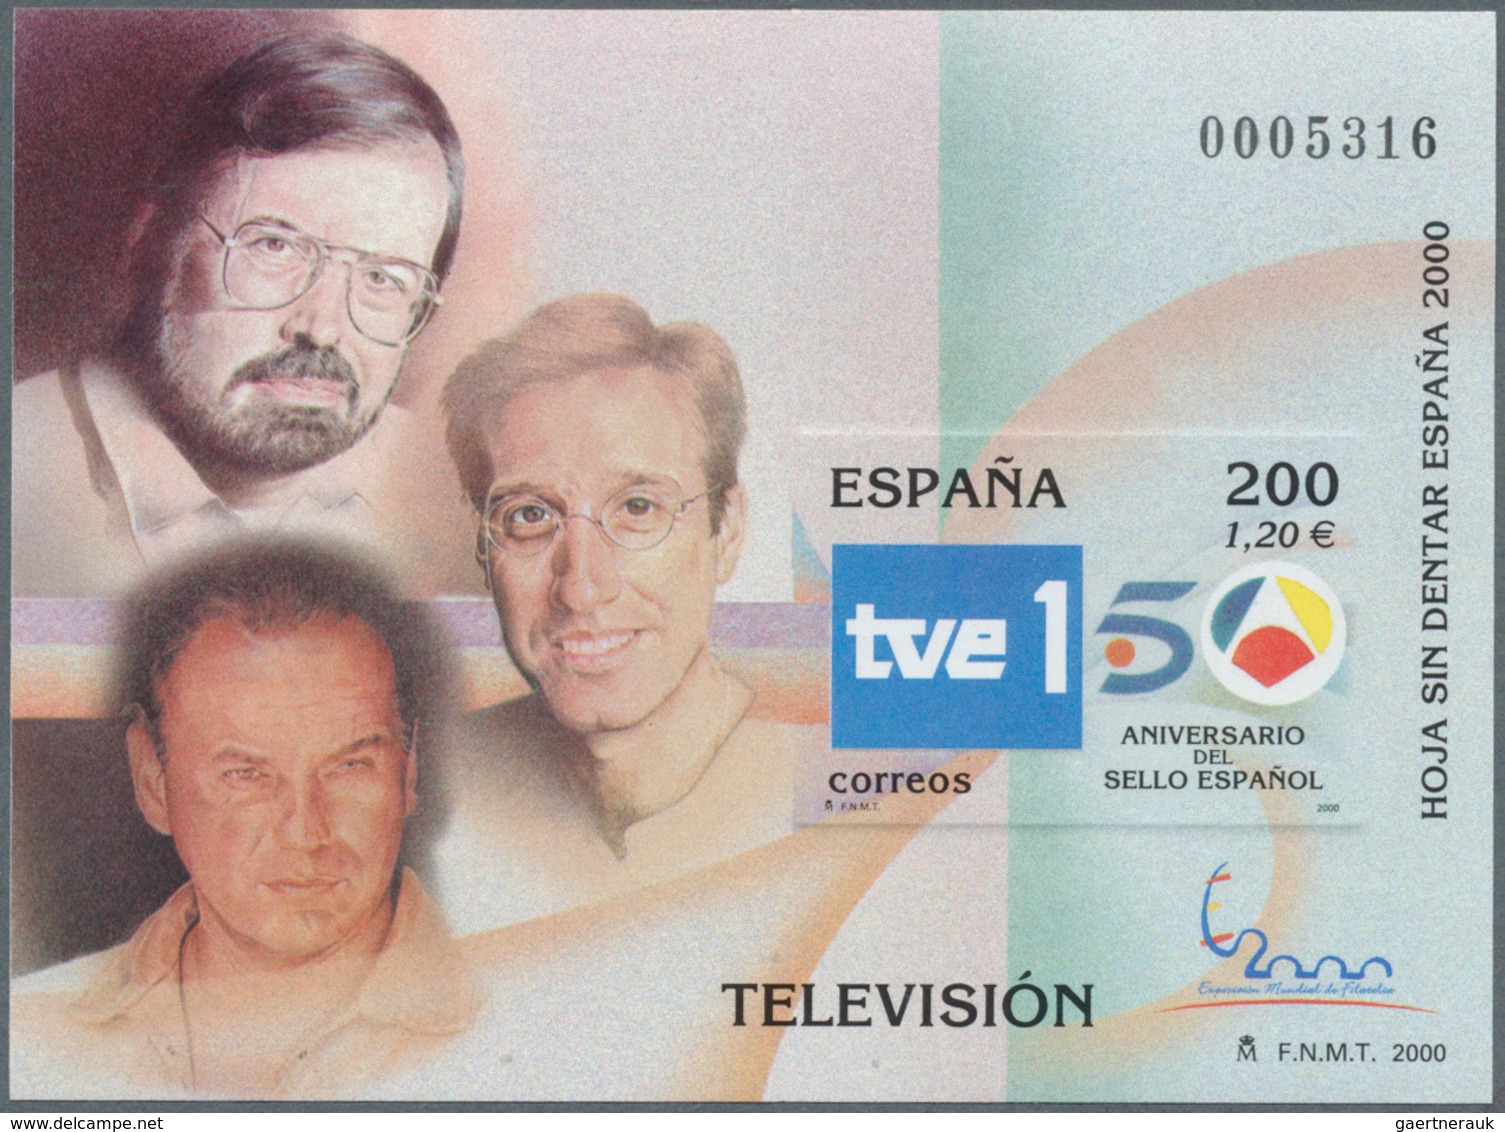 28287 Spanien: 2000. Espana 2000 Intl. Philatelic Exhibition - Set of 11 imperforate souvenir sheets overp